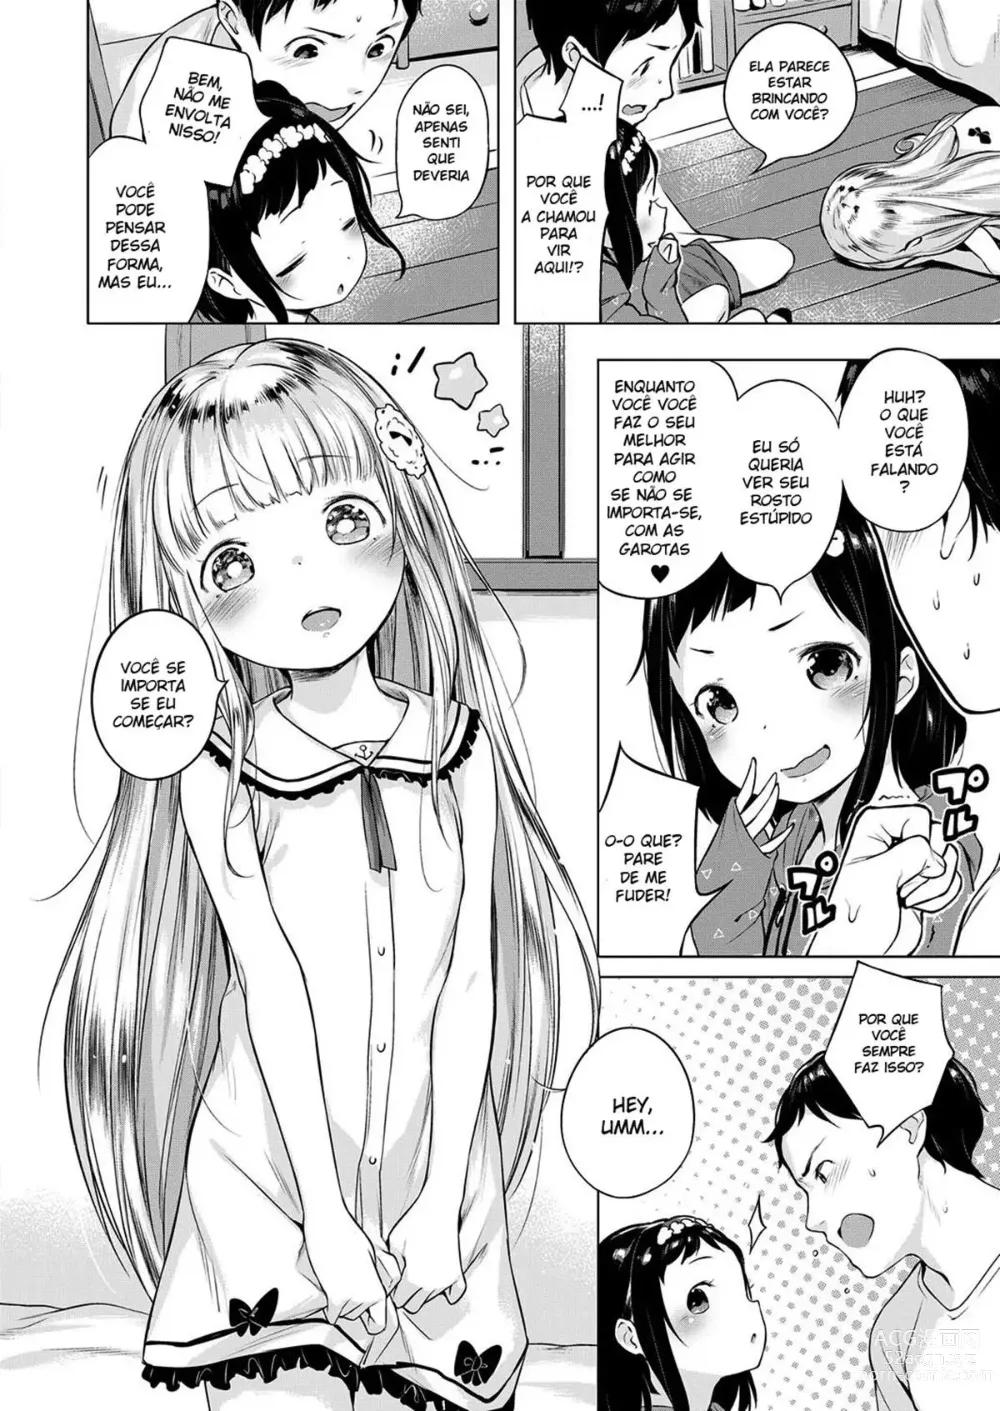 Page 6 of manga Intruding Stripping!